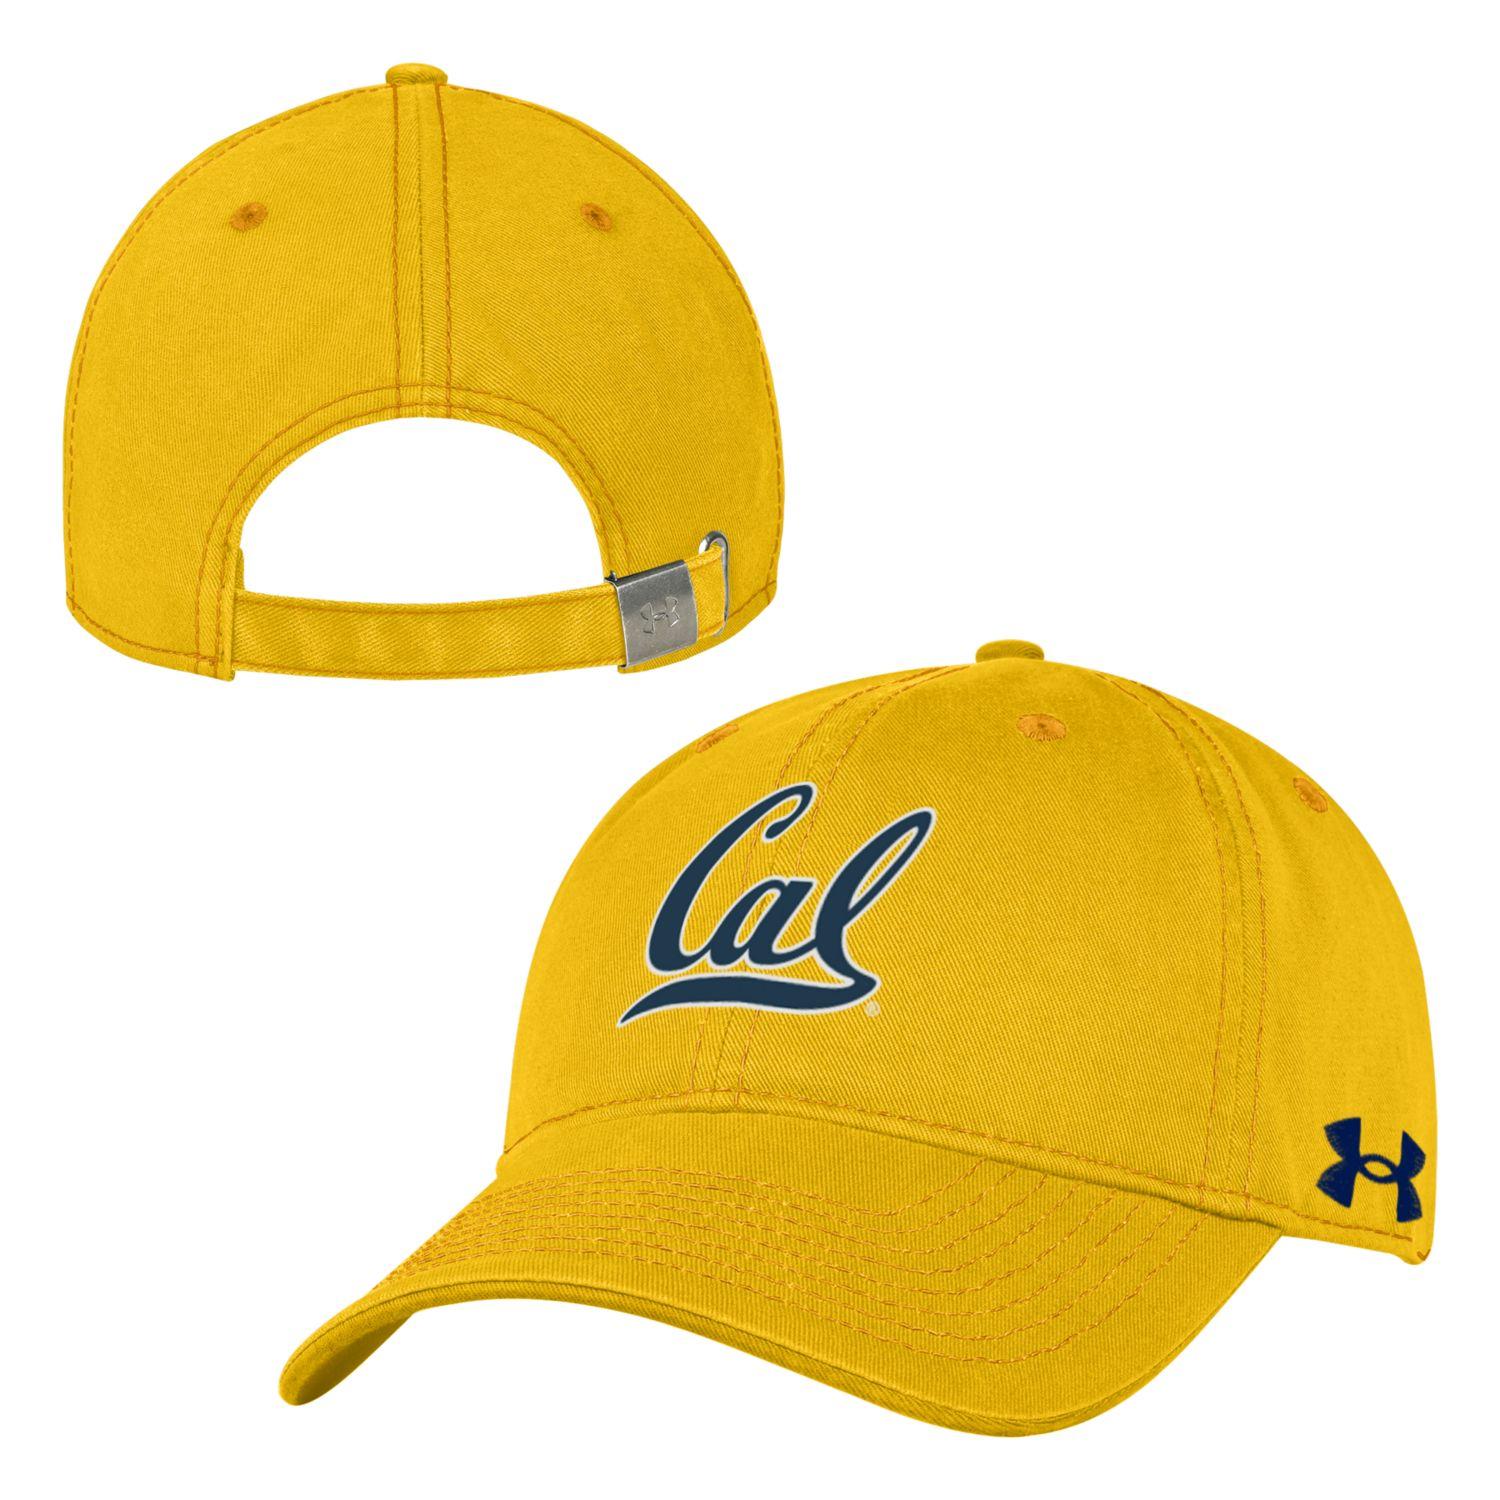 U.C. Berkeley 2 1/2 Cal " embroidered performance cotton Under Armour adjustable hat-Gold-Shop College Wear